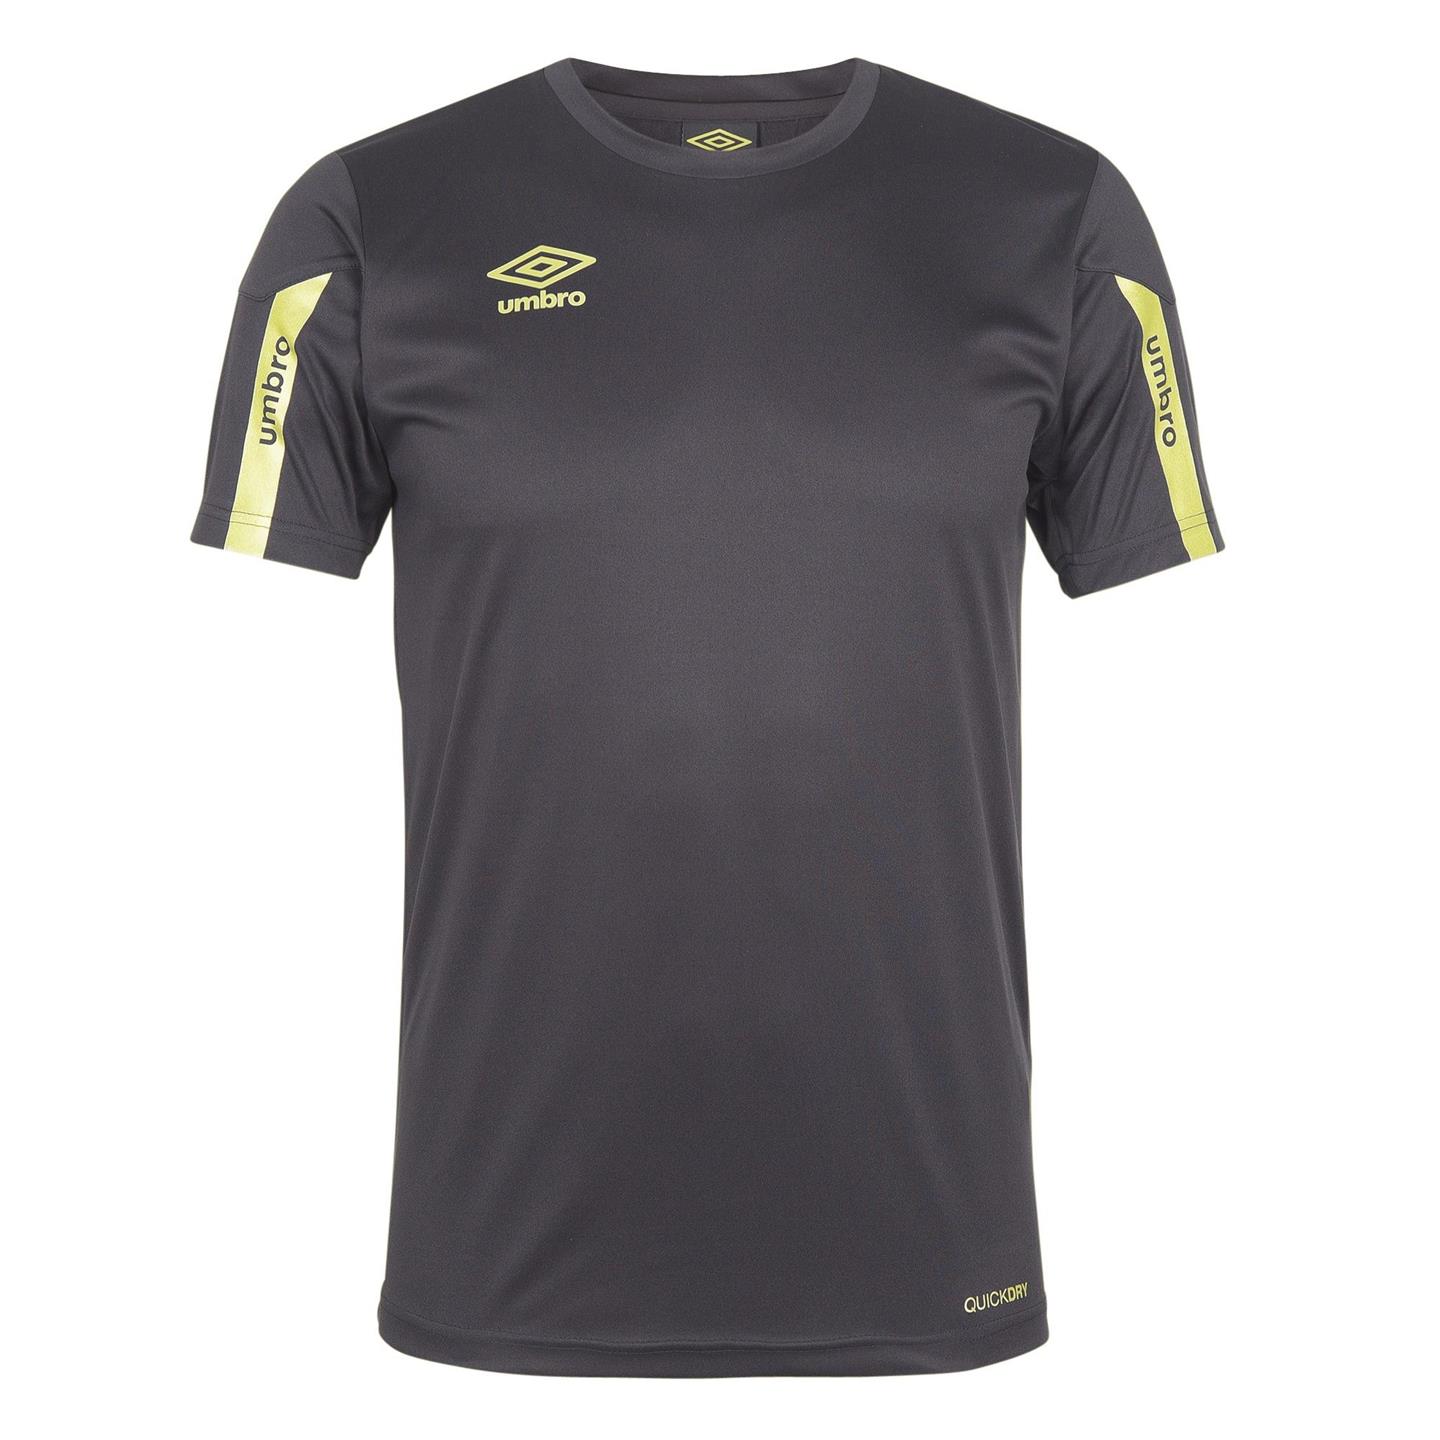 Umbro Core t-shirt svart/gul